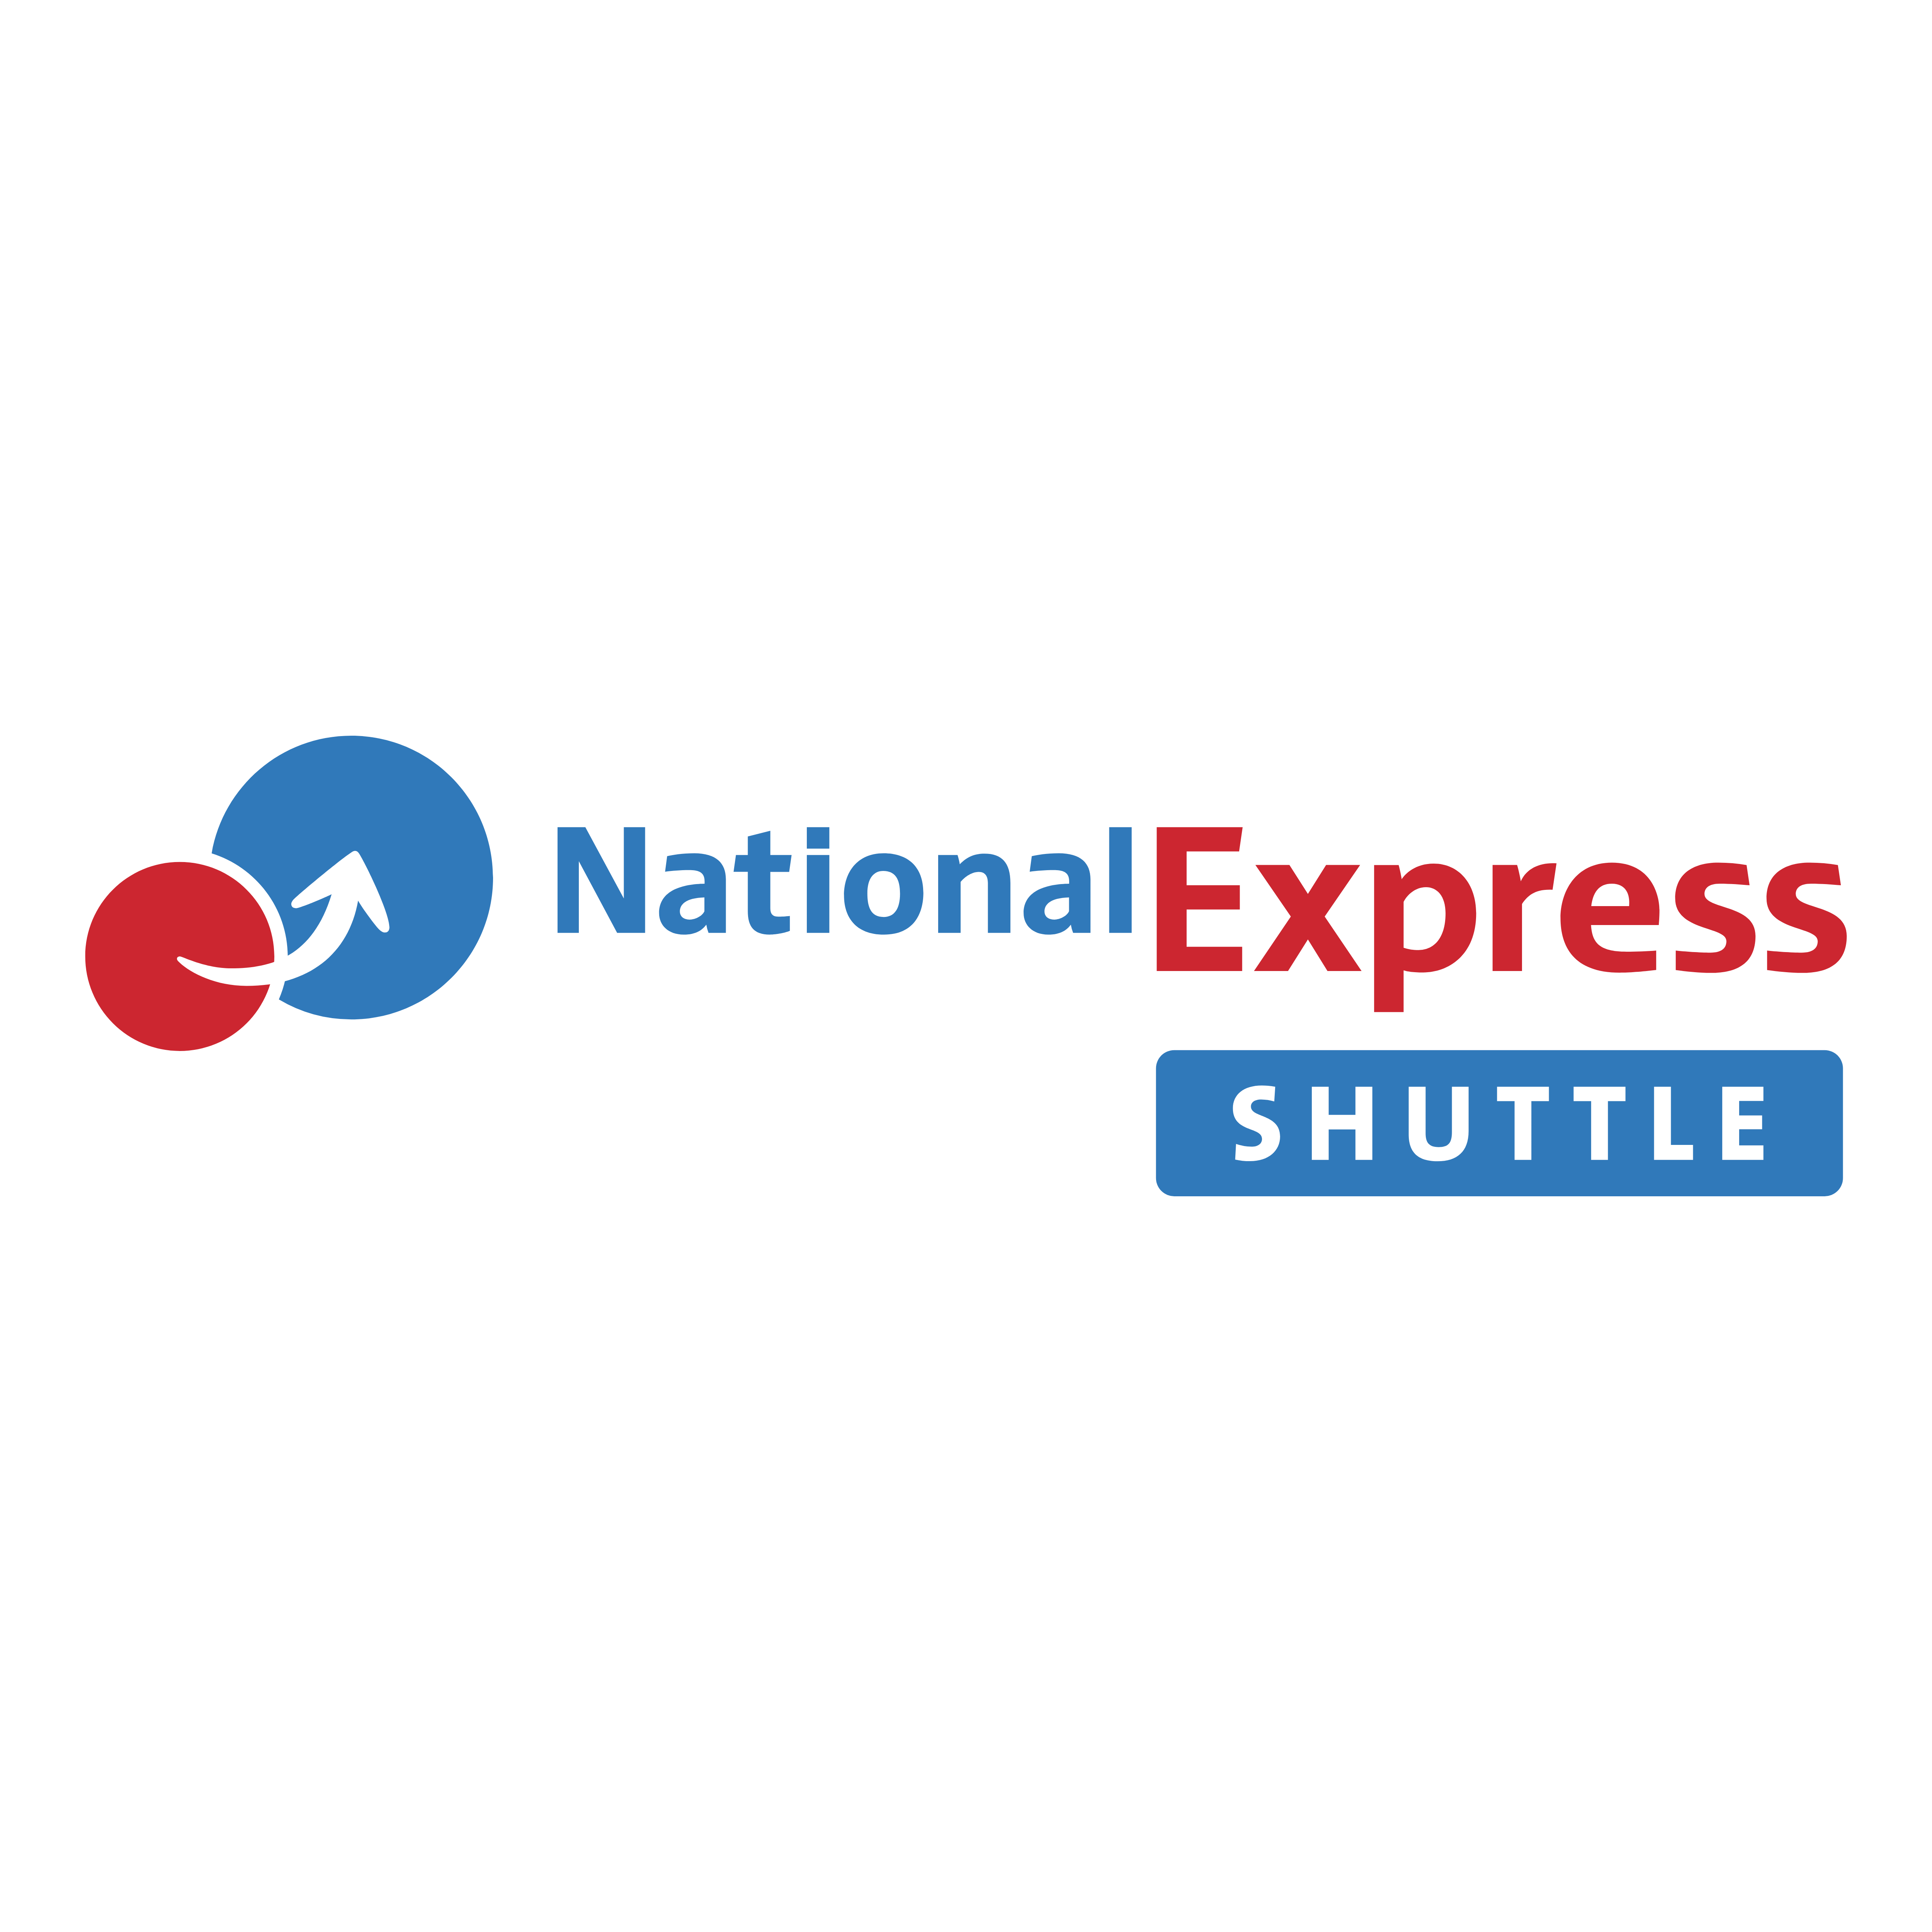 Shuttle Logo - National Express Shuttle – Logos Download